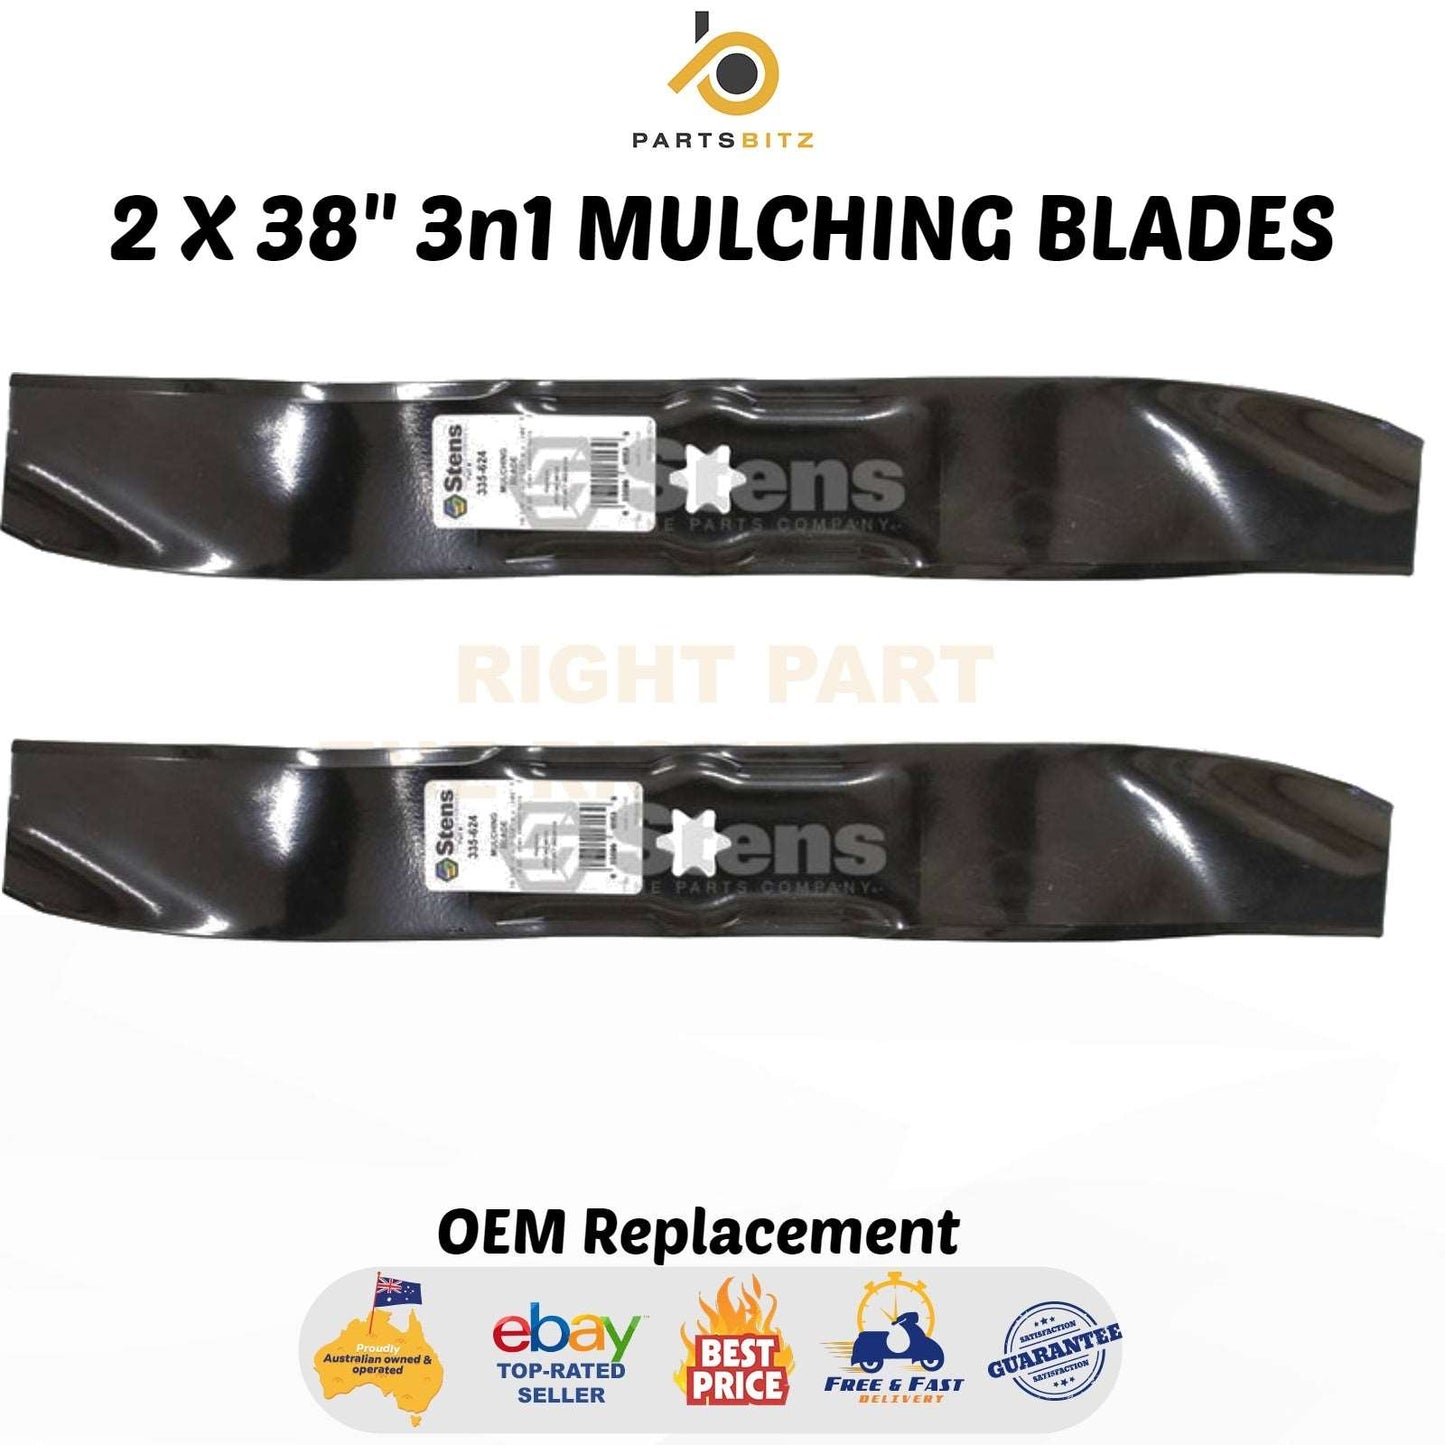 2 X 38" 3n1 Mulching Blades Suits Mtd Ride on Mower 942-0610 942-0610A